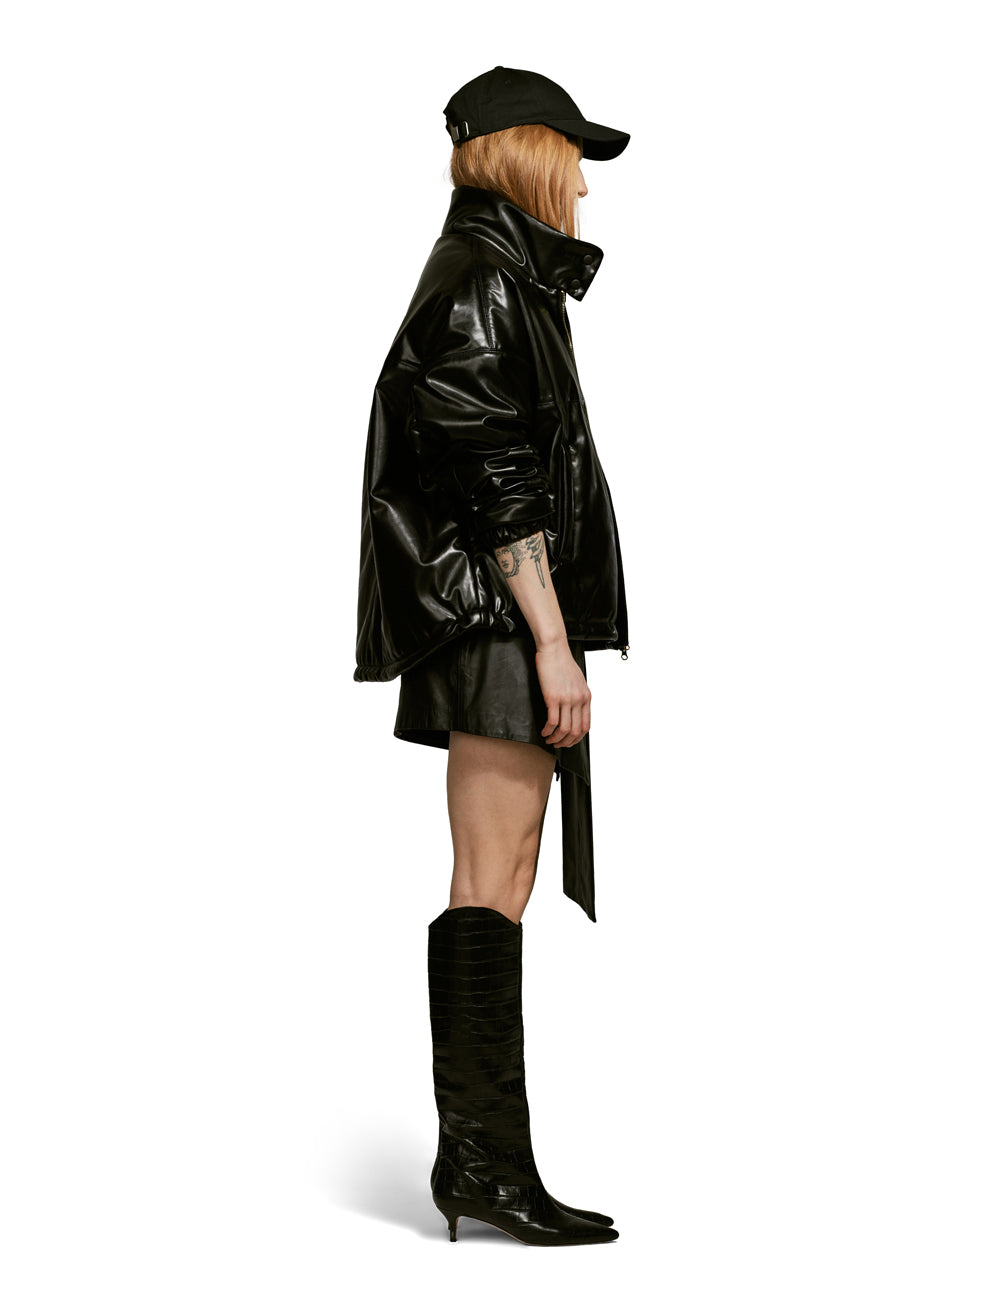 Billy Stormi Black ColdWeather Cropped Bomber Coat Animal Free Leather Sustainable Jacket